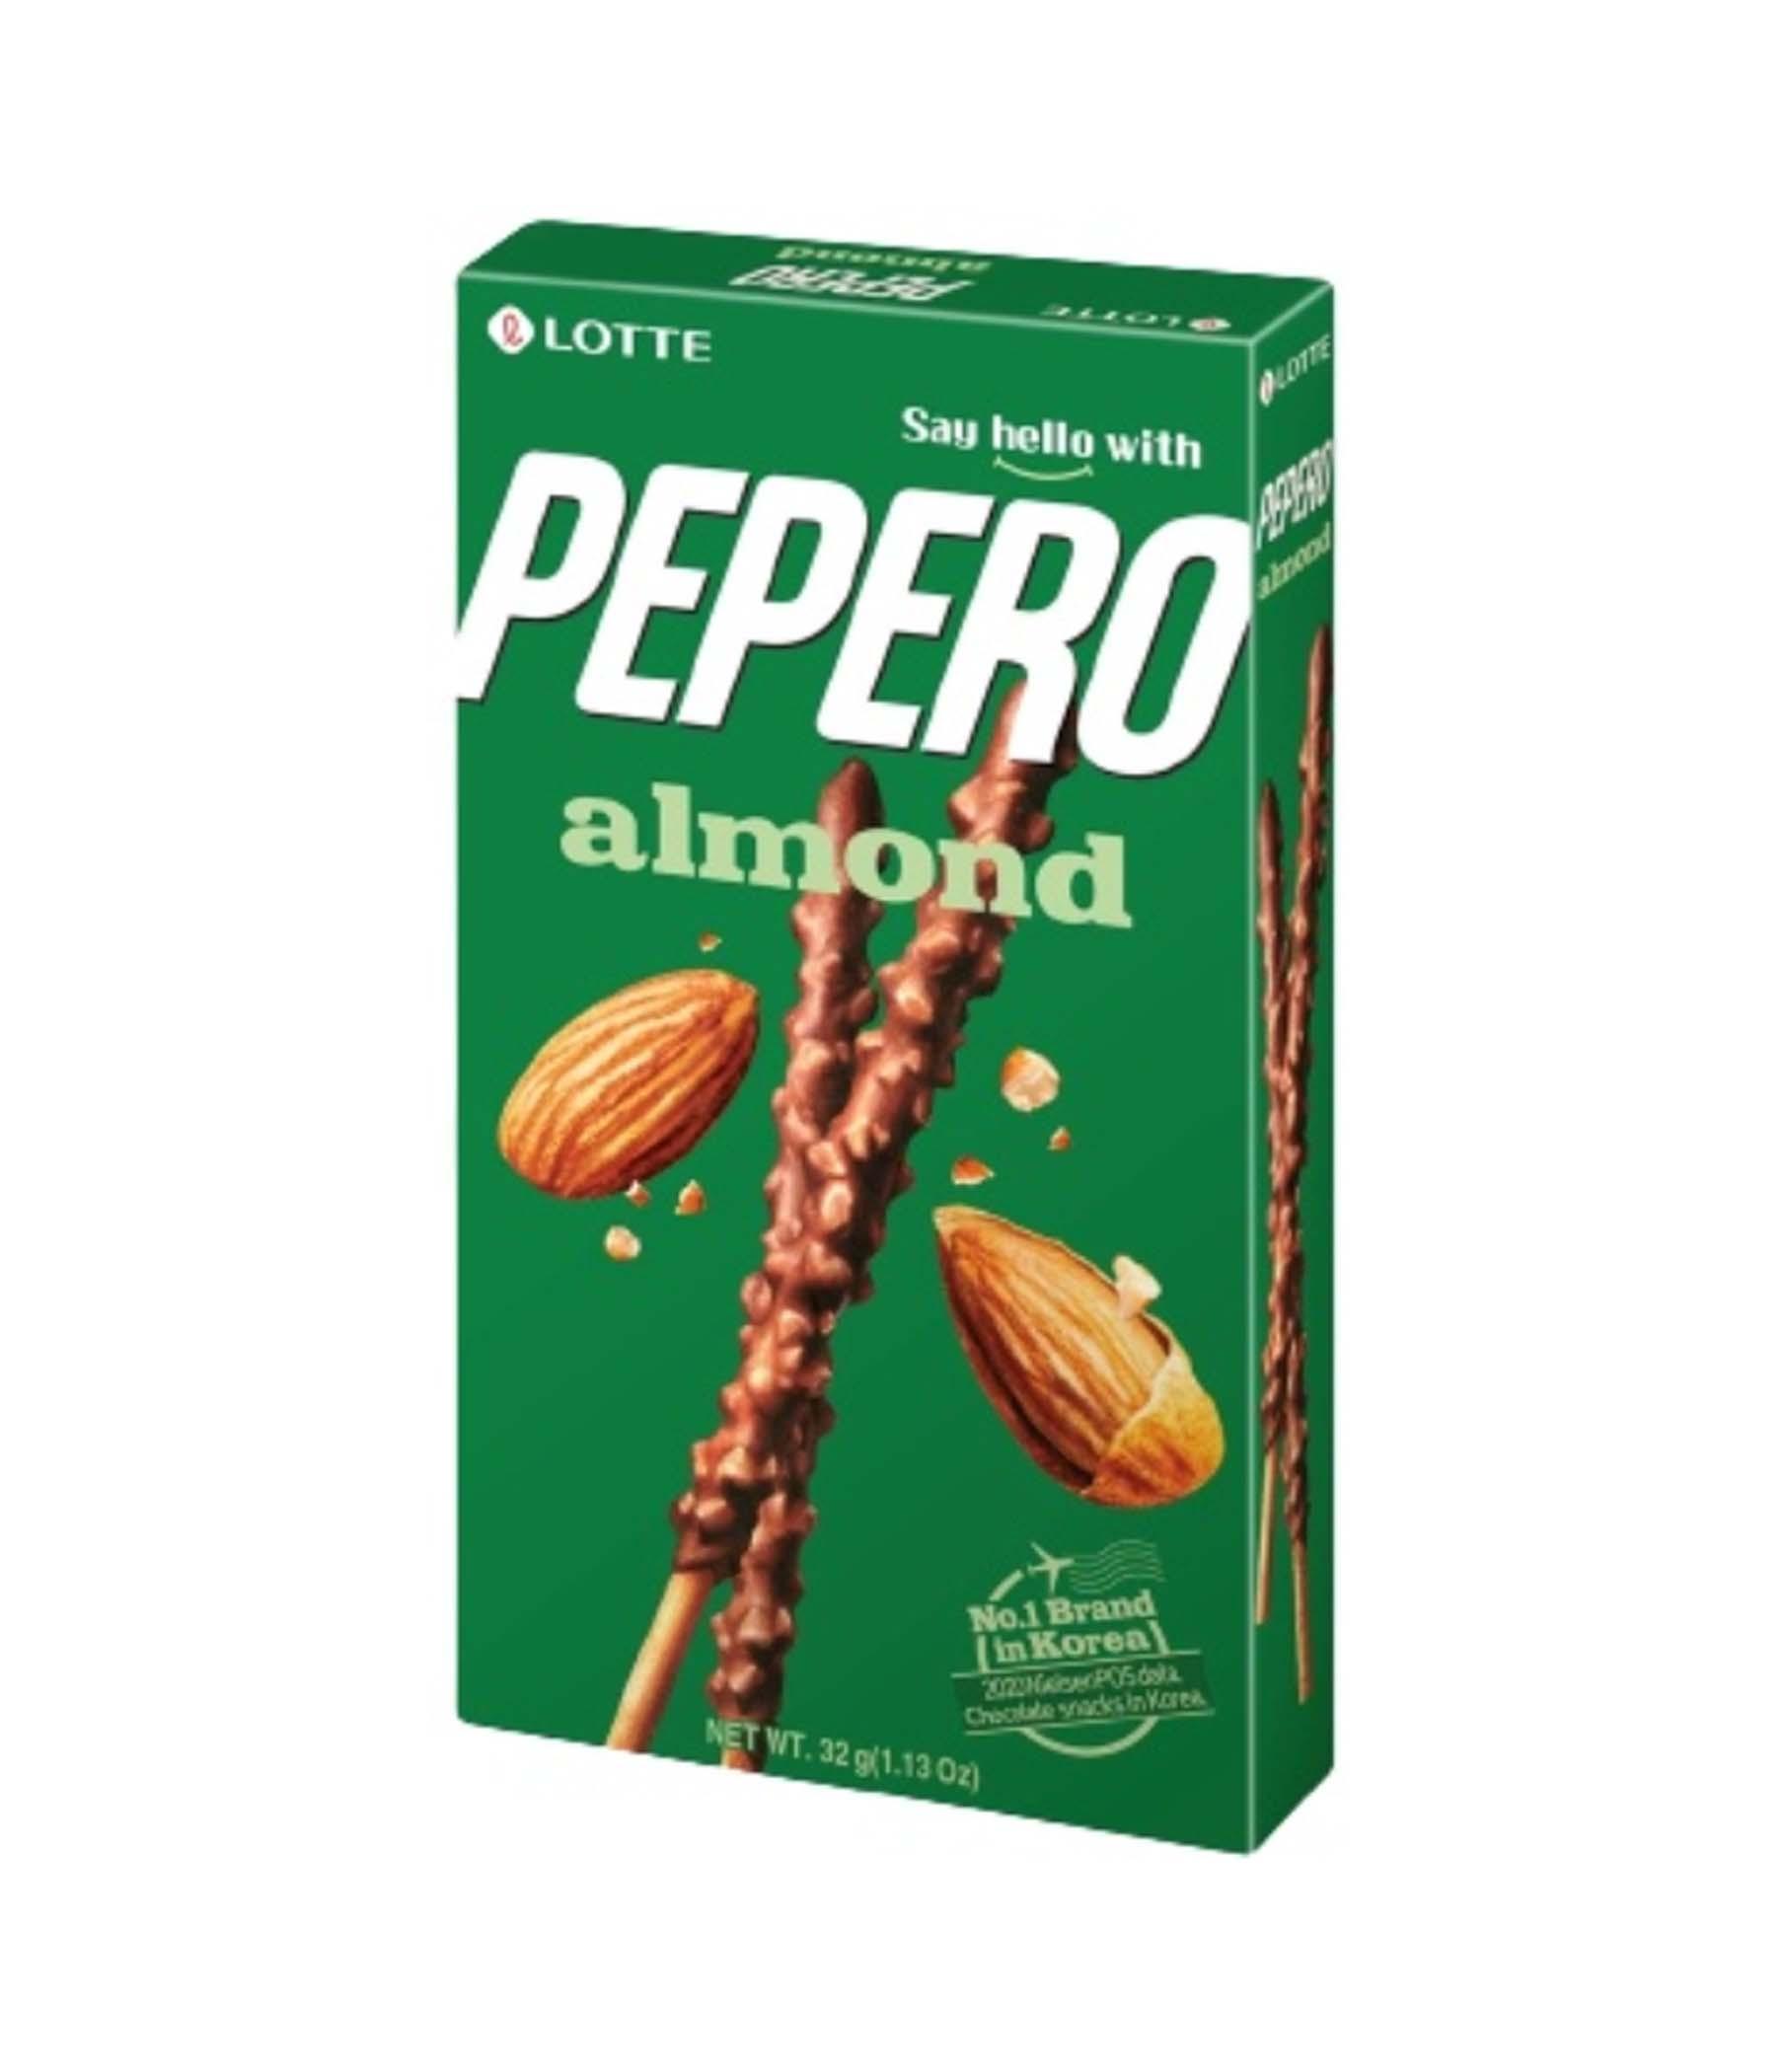 lotte-pepero-almond-cookies